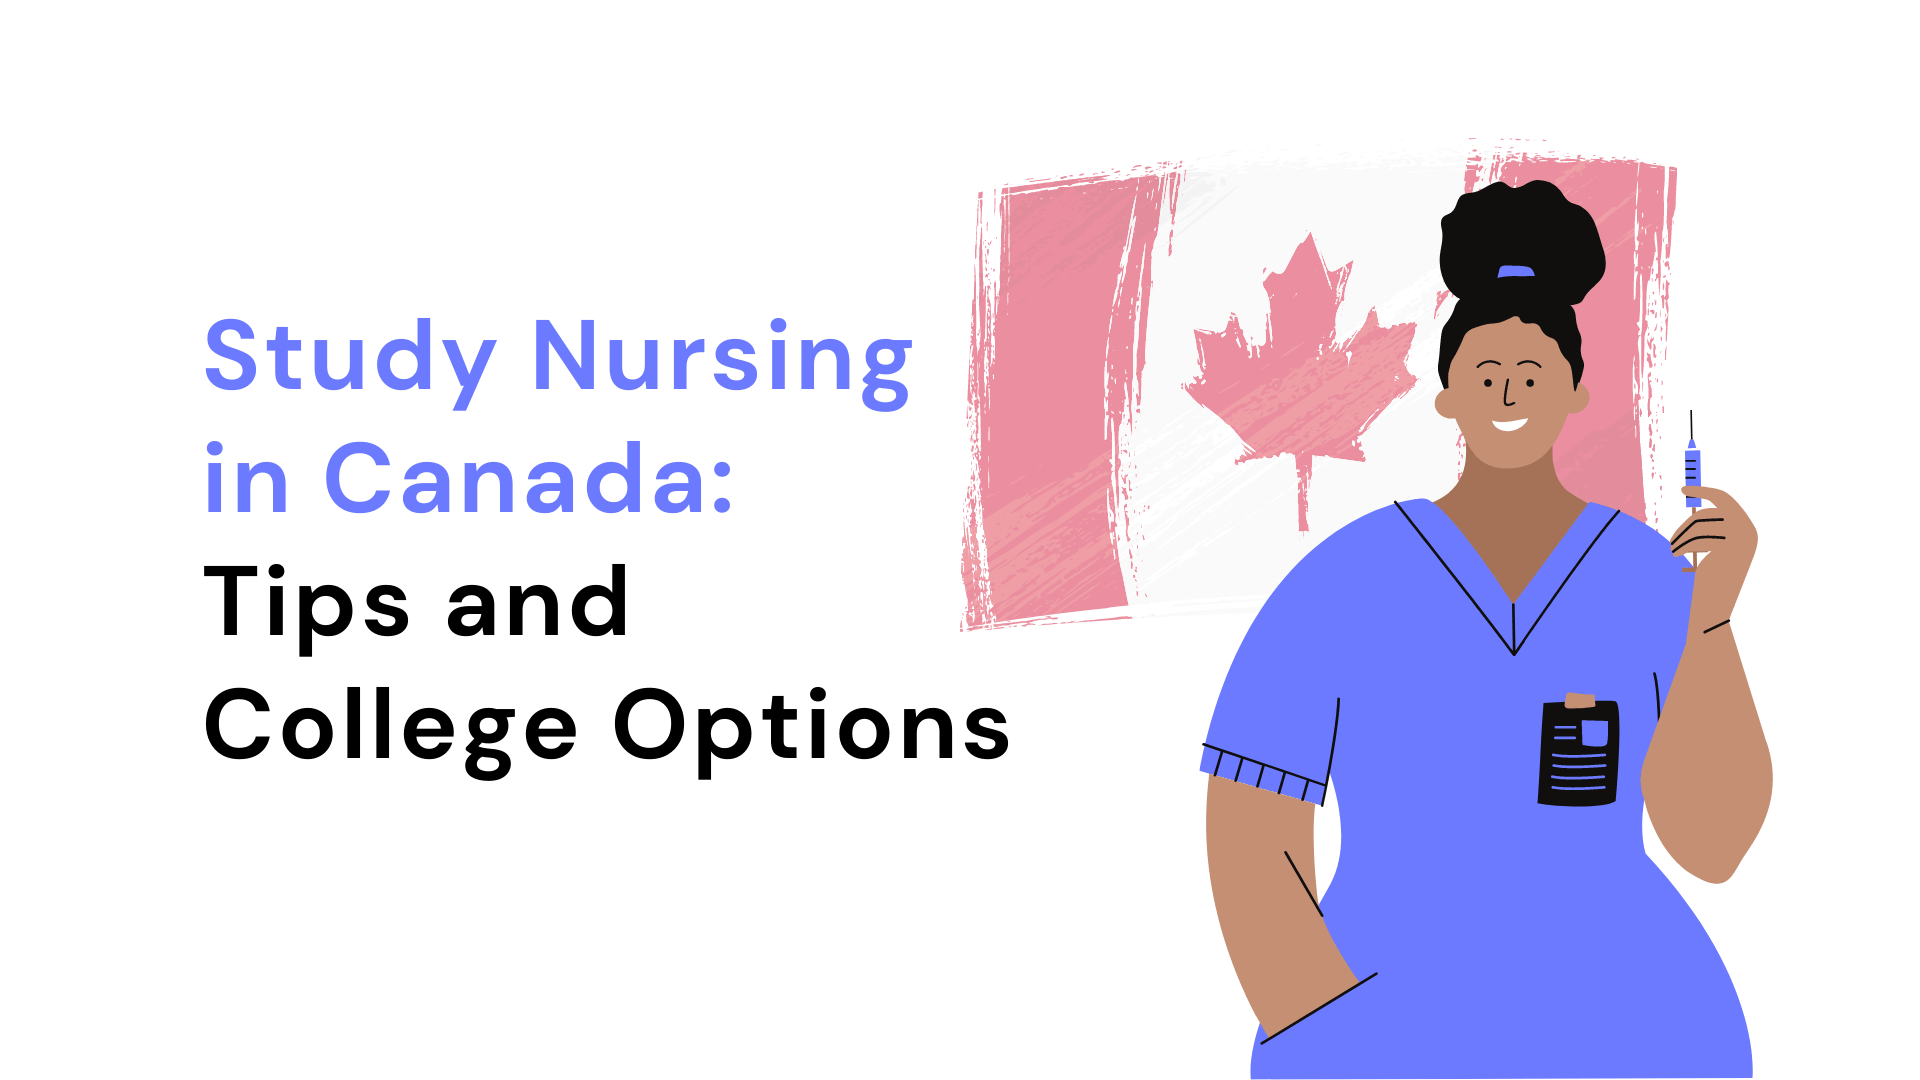 Study Nursing in Canada Tips